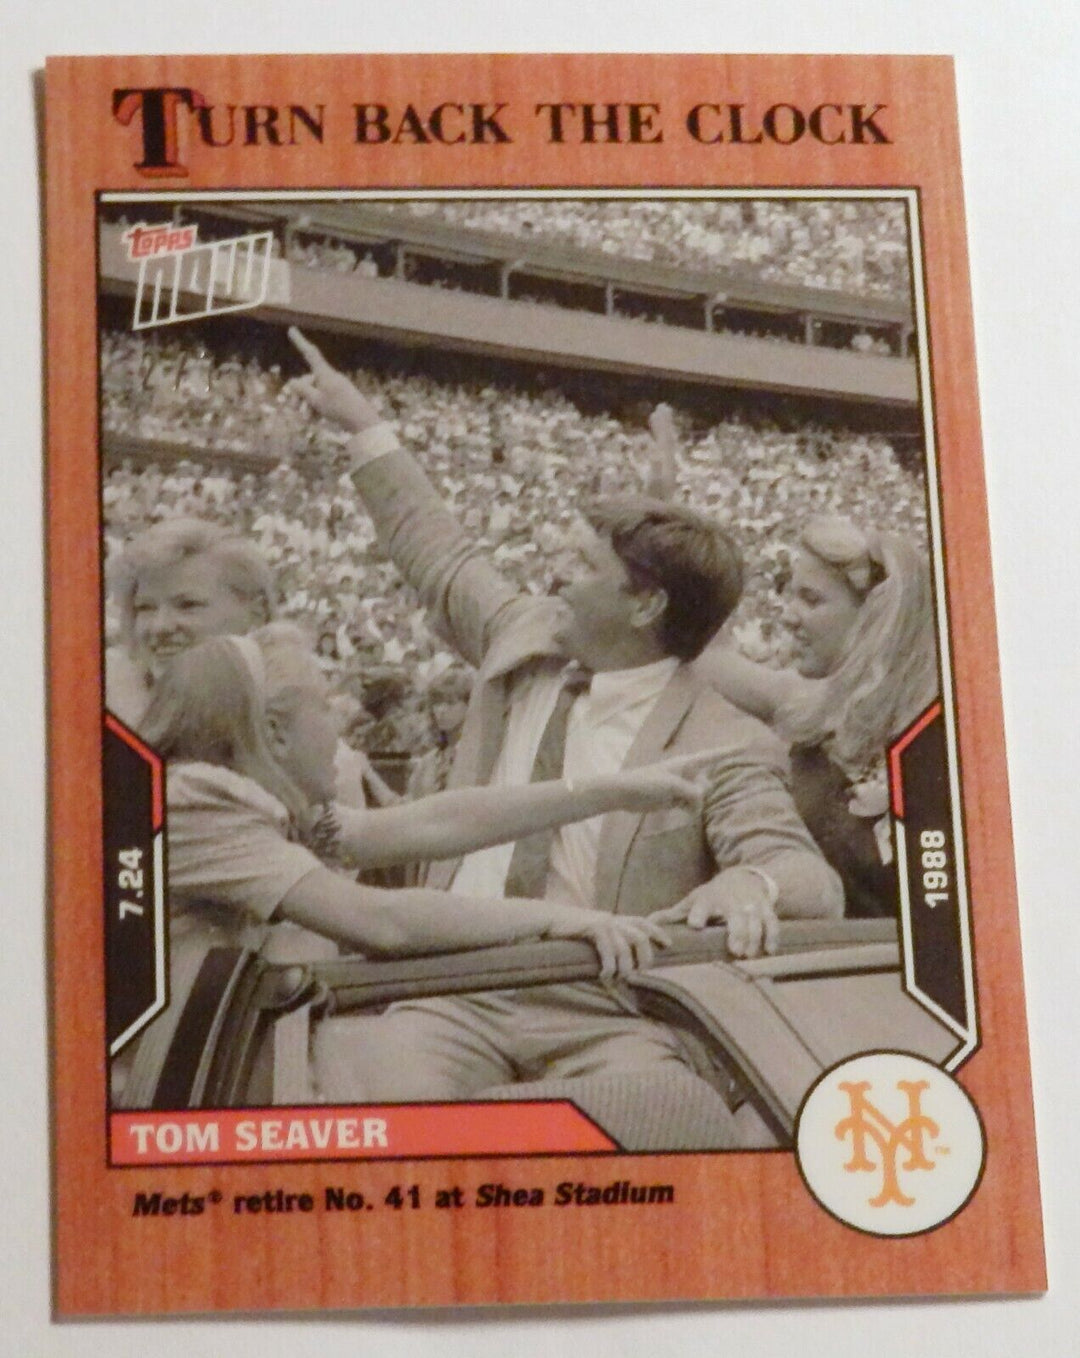 TOM SEAVER RETIRE #41 @ SHEA STADIUM TURN BACK CLOCK TOPPS NOW CARD #115 CHERRY Image 3